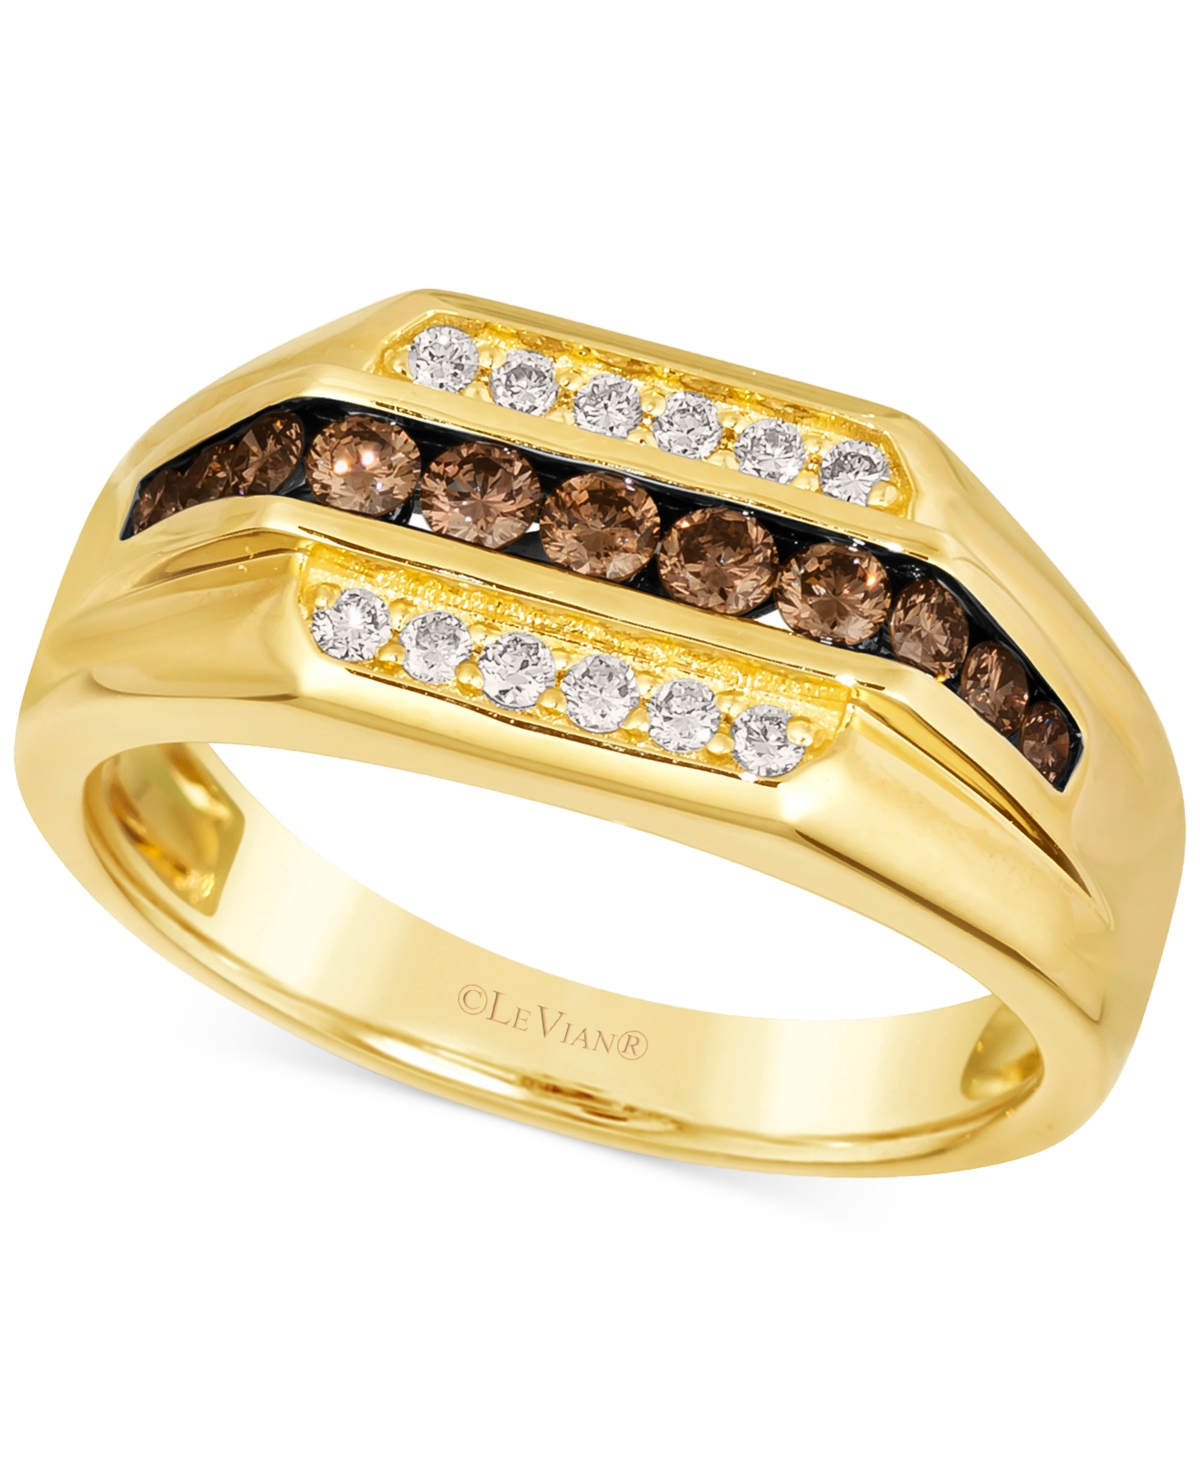 Men's Chocolate Diamond & Nude Diamond Three Row Ring (5/8 ct. t.w.) in 14k Gold - Gold